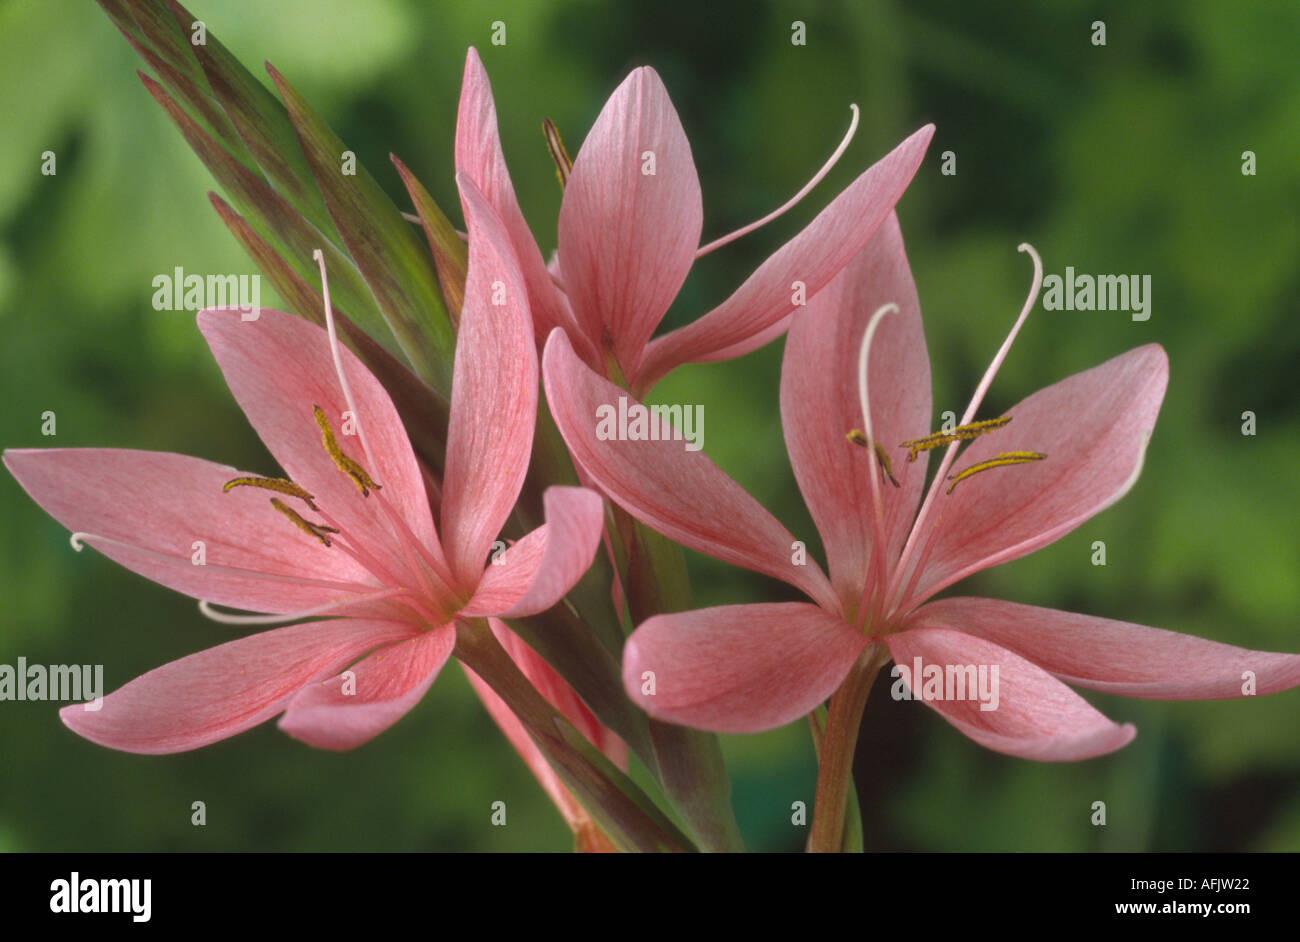 Hesperantha coccinea syn. Schizostylis coccinea 'Fenland Daybreak'. Kaffir lily. Stock Photo